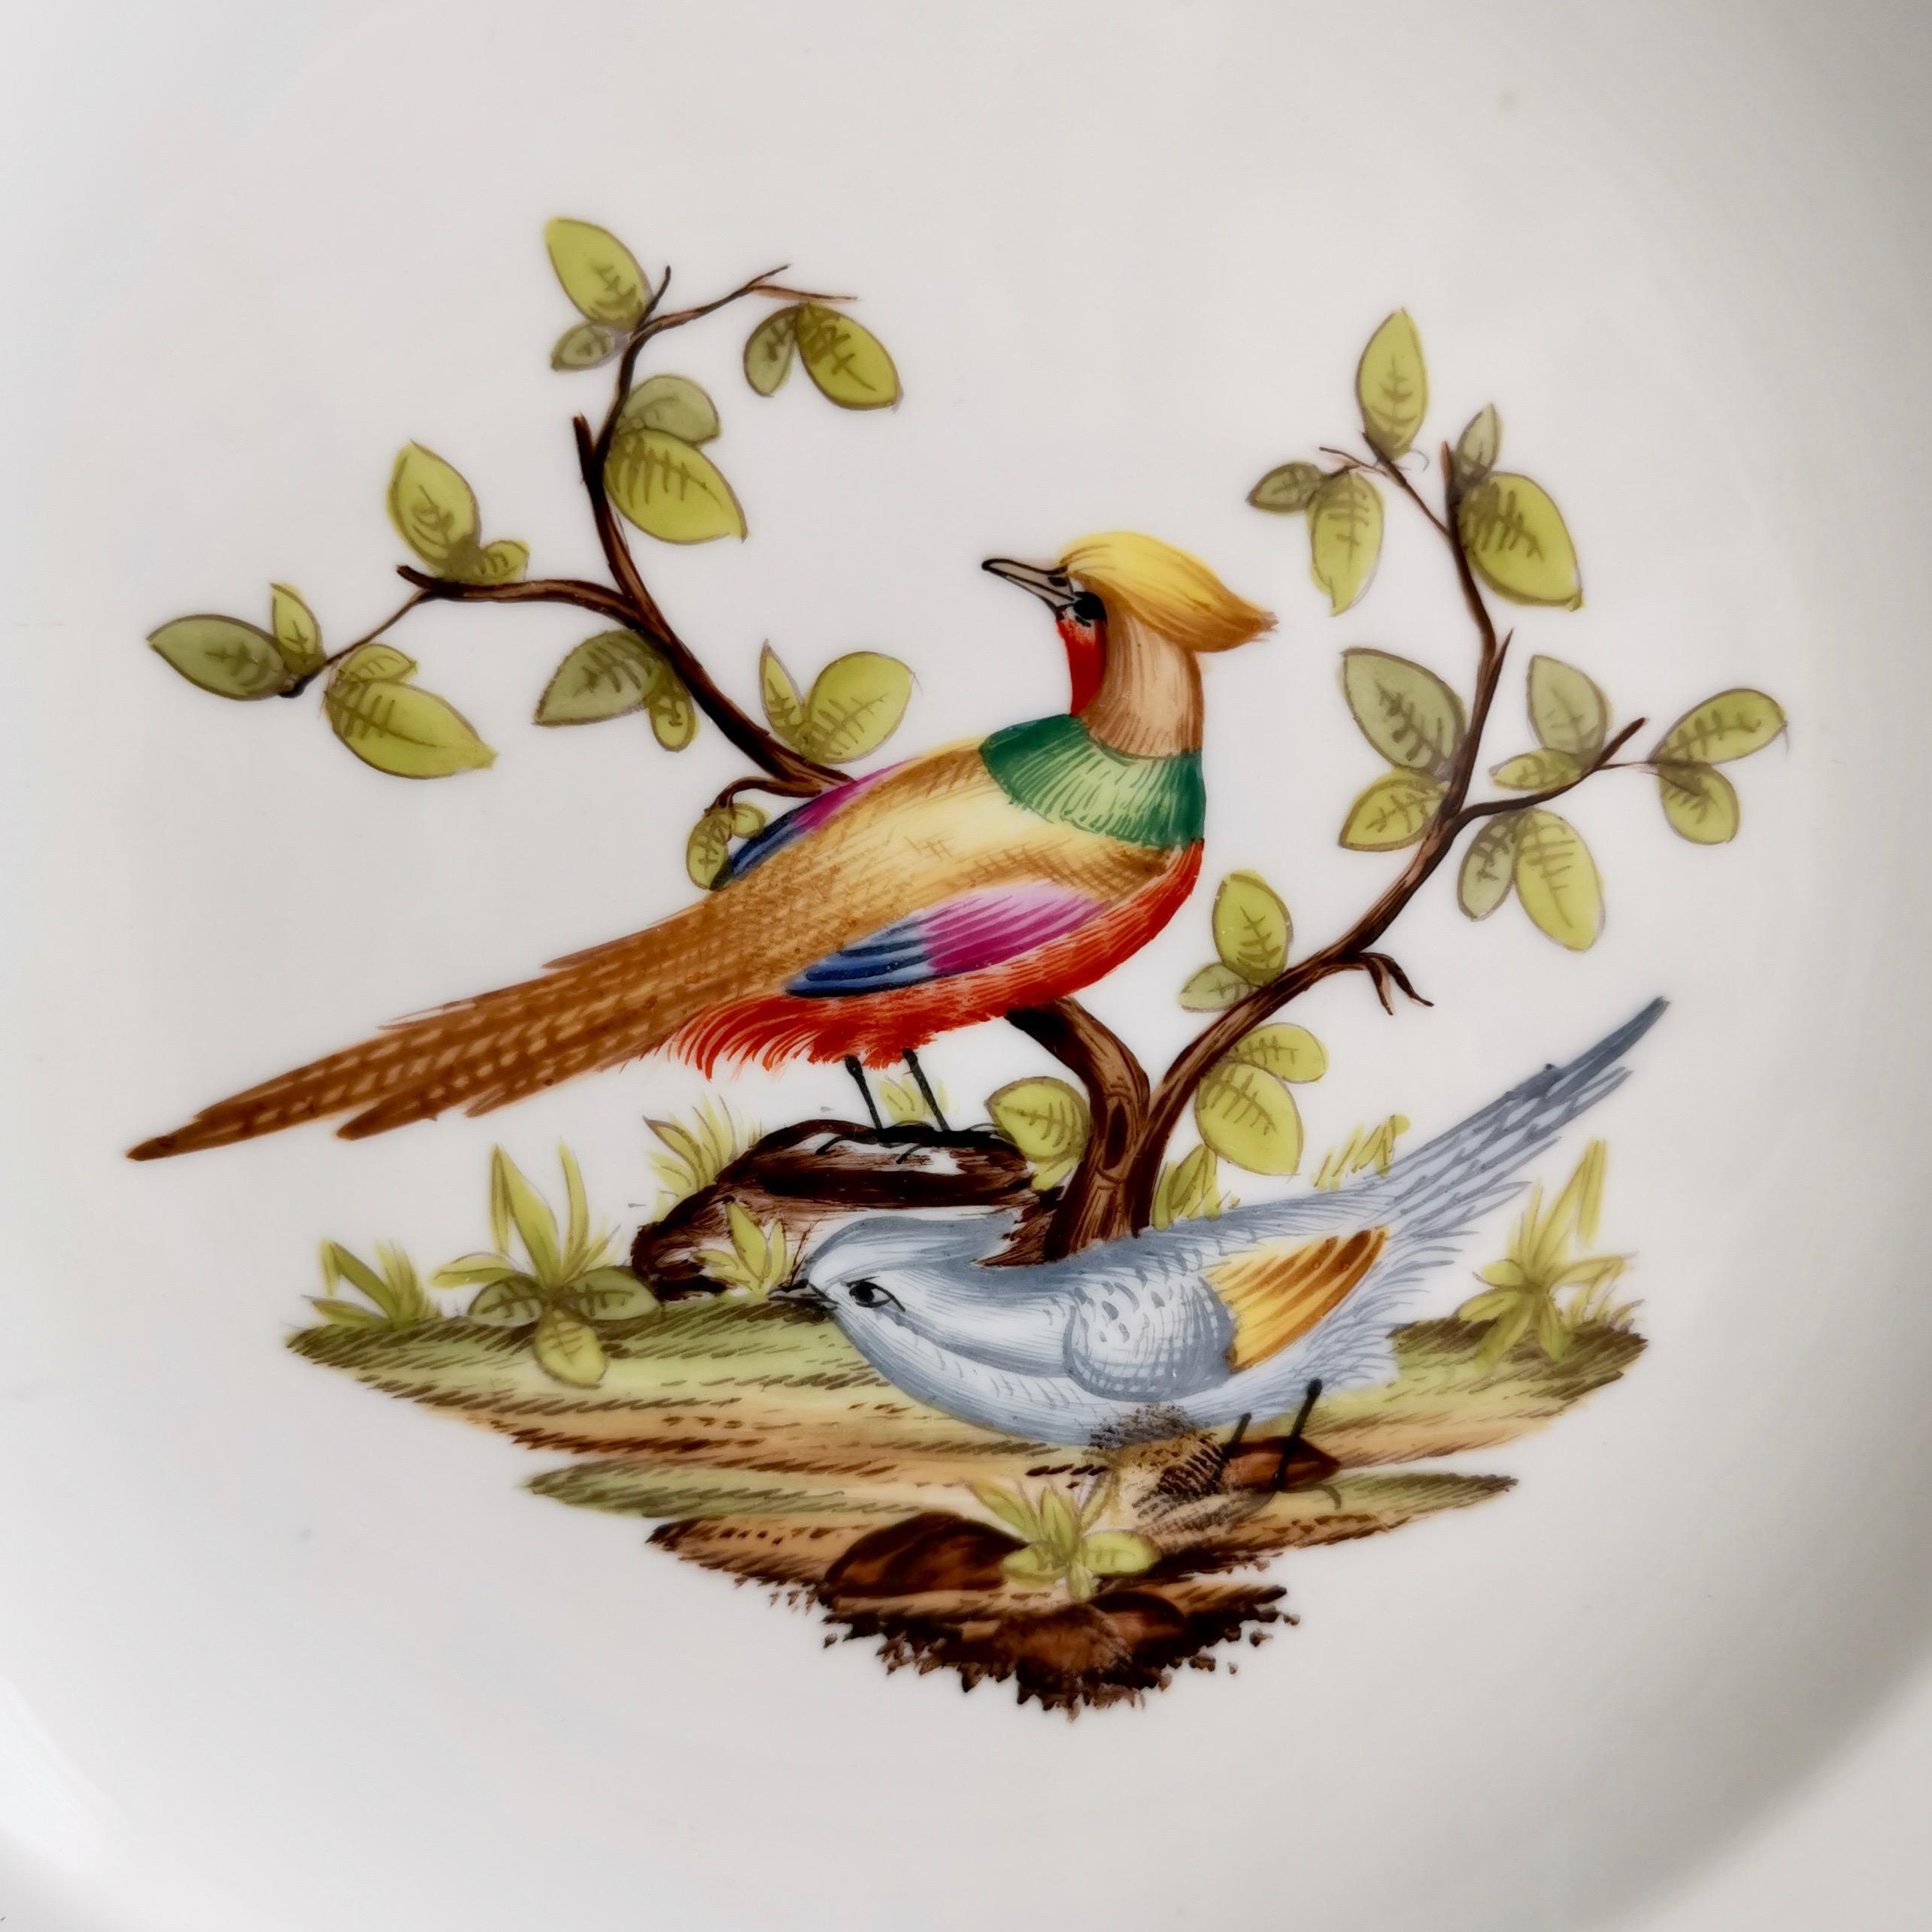 19th Century Set of 6 Meissen Porcelain Dessert Plates, White, Hand Painted Birds, 1852-1870